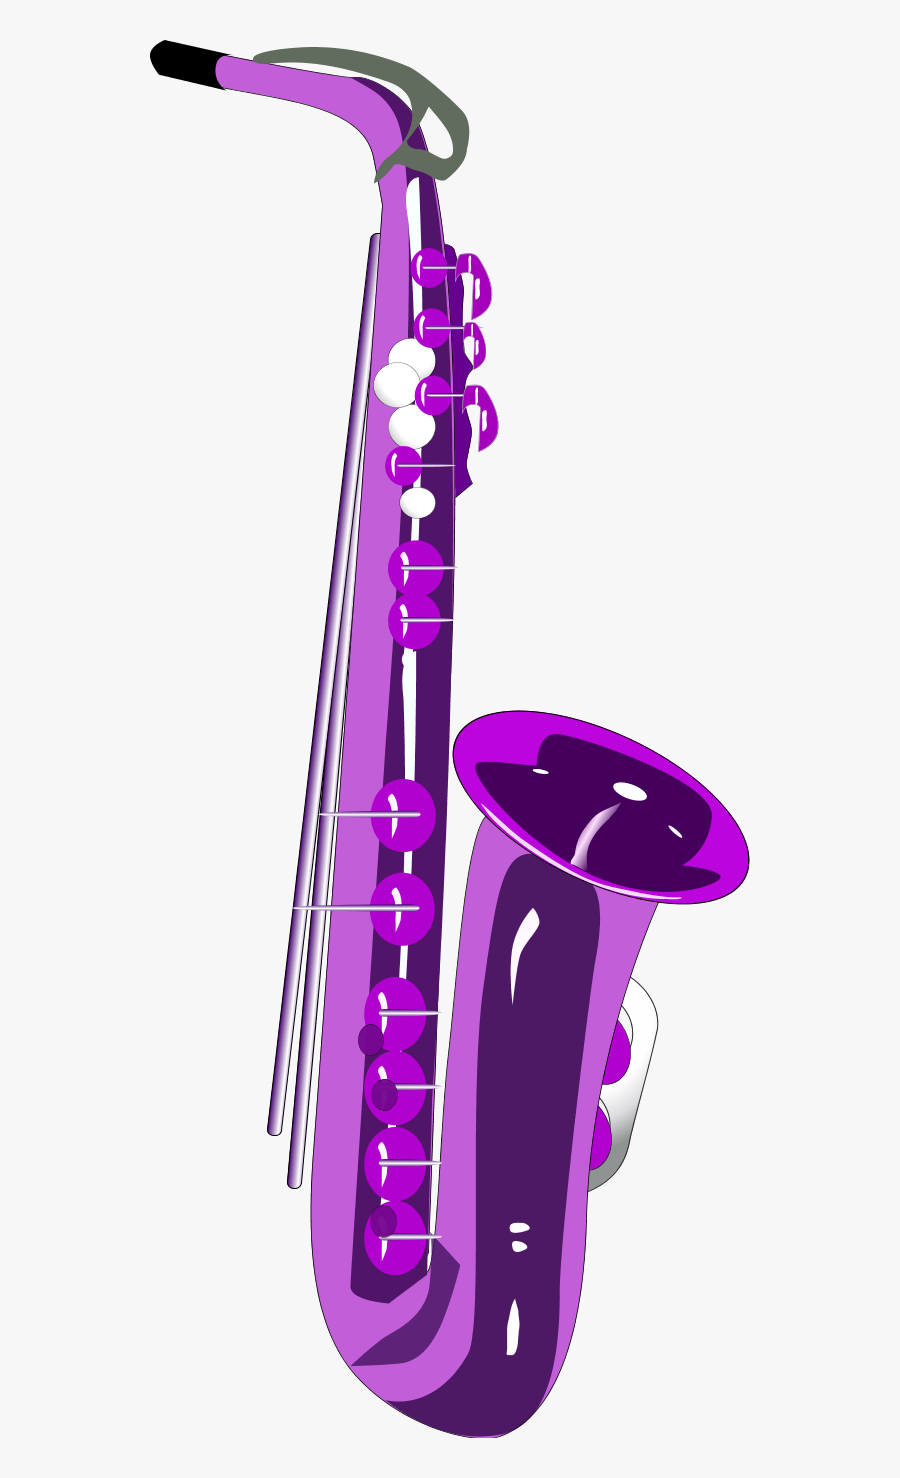 Transparent Tenor Saxophone Clipart - Clip Art Cartoon Tenor Sax, Transparent Clipart